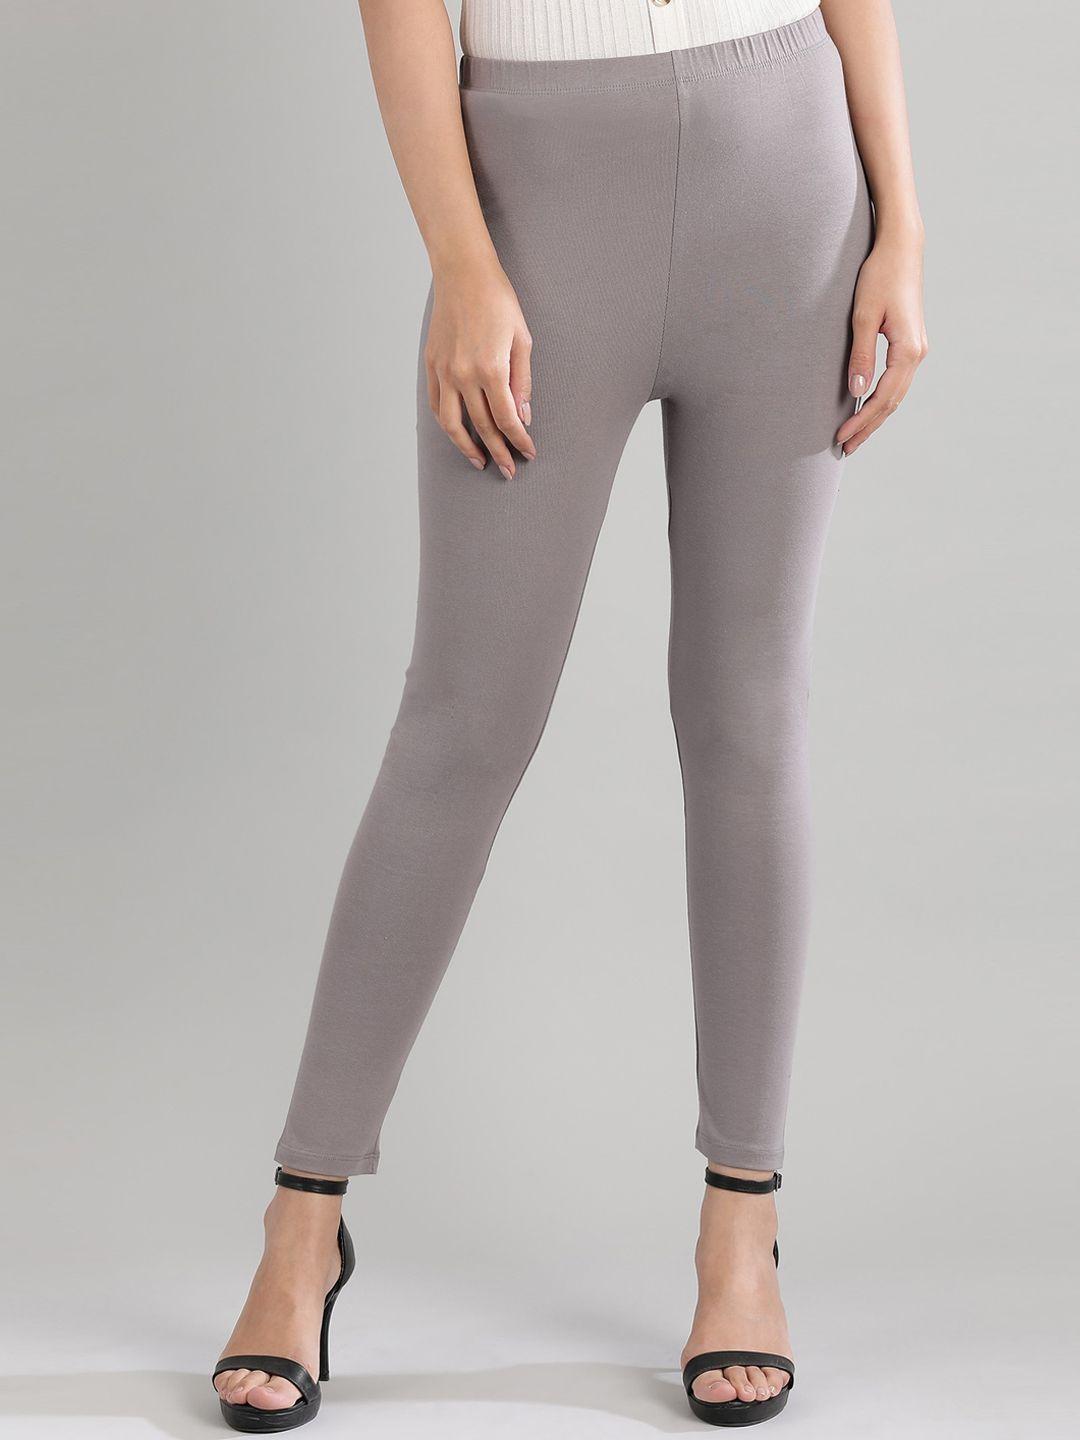 aurelia women grey tights